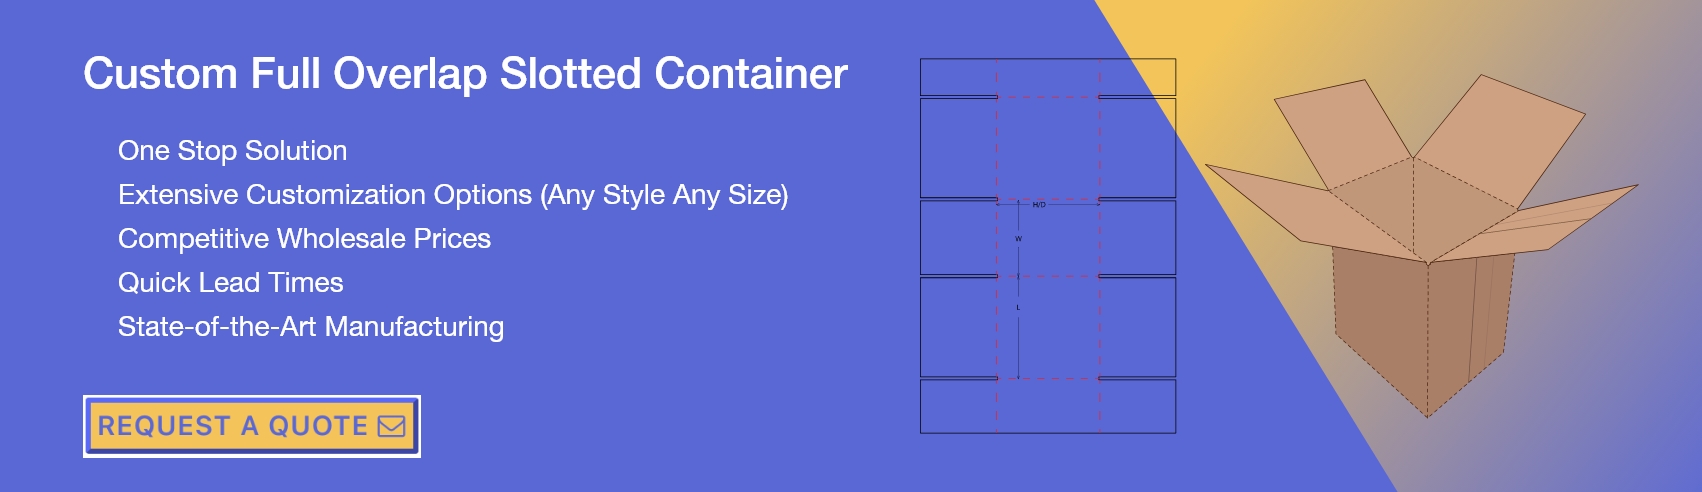 Custom Full Overlap Slotted Container